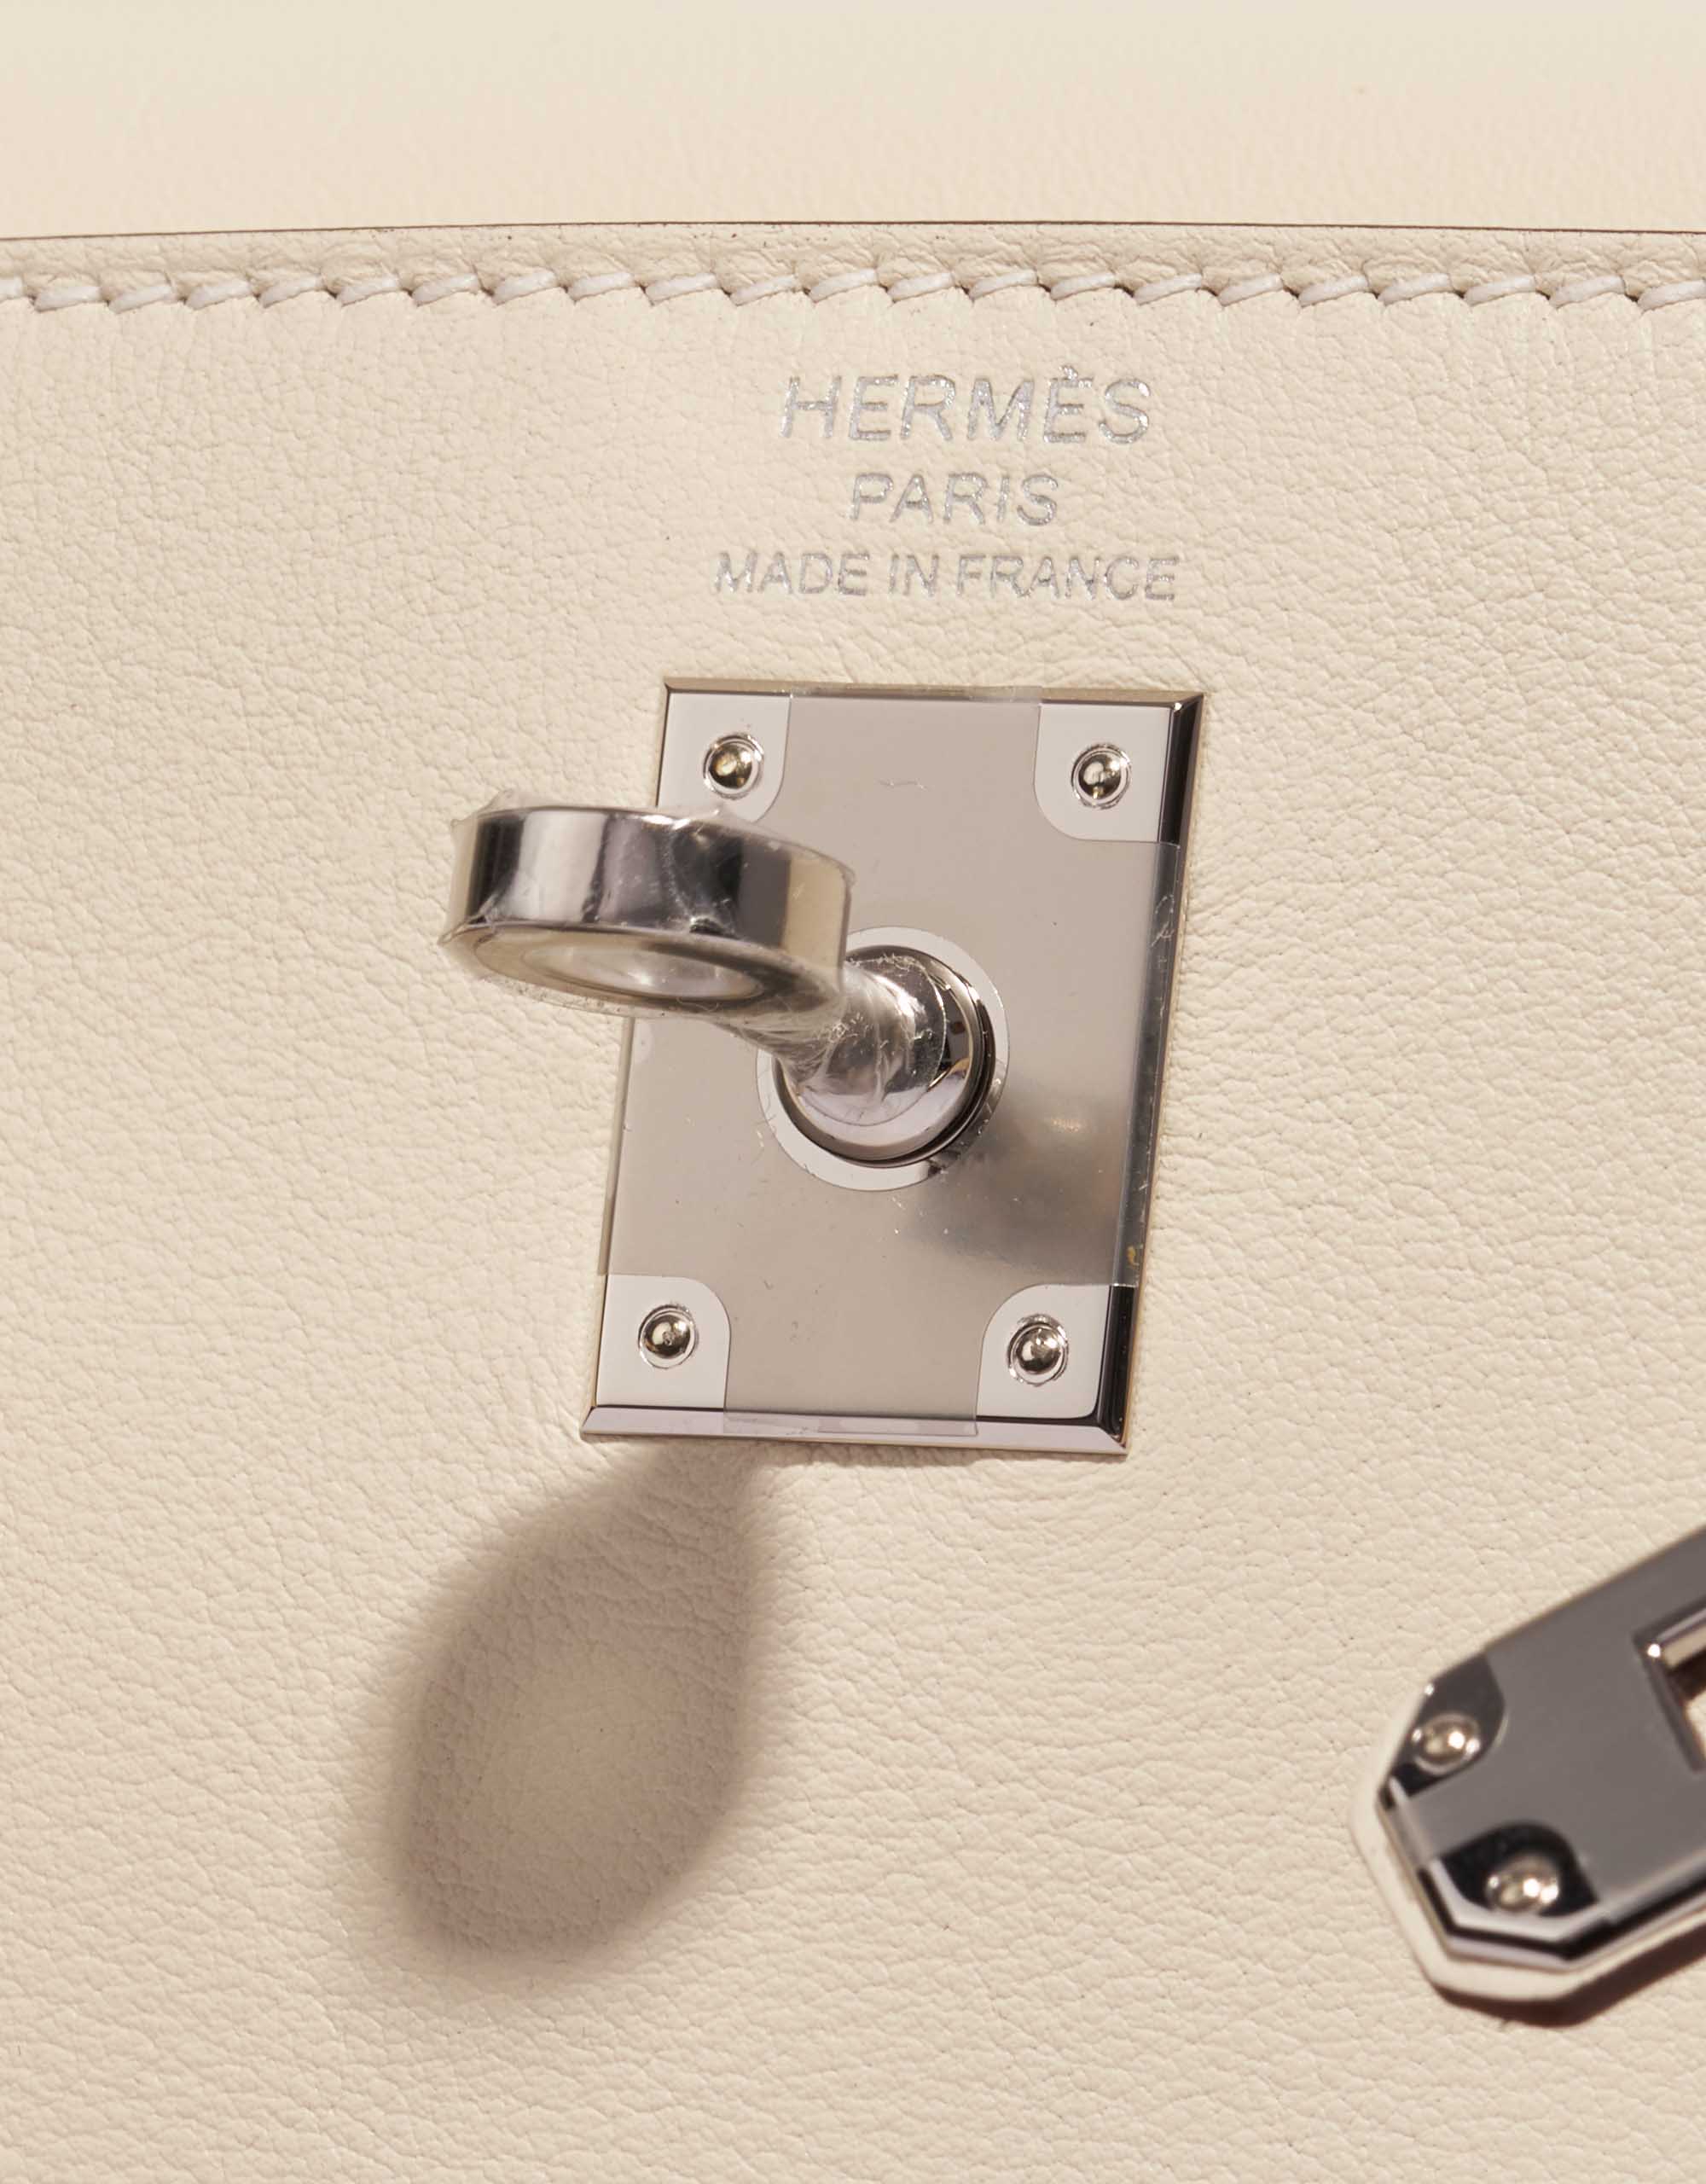 Hermes Kelly 25 Nata Swift Gold Hardware - Vendome Monte Carlo